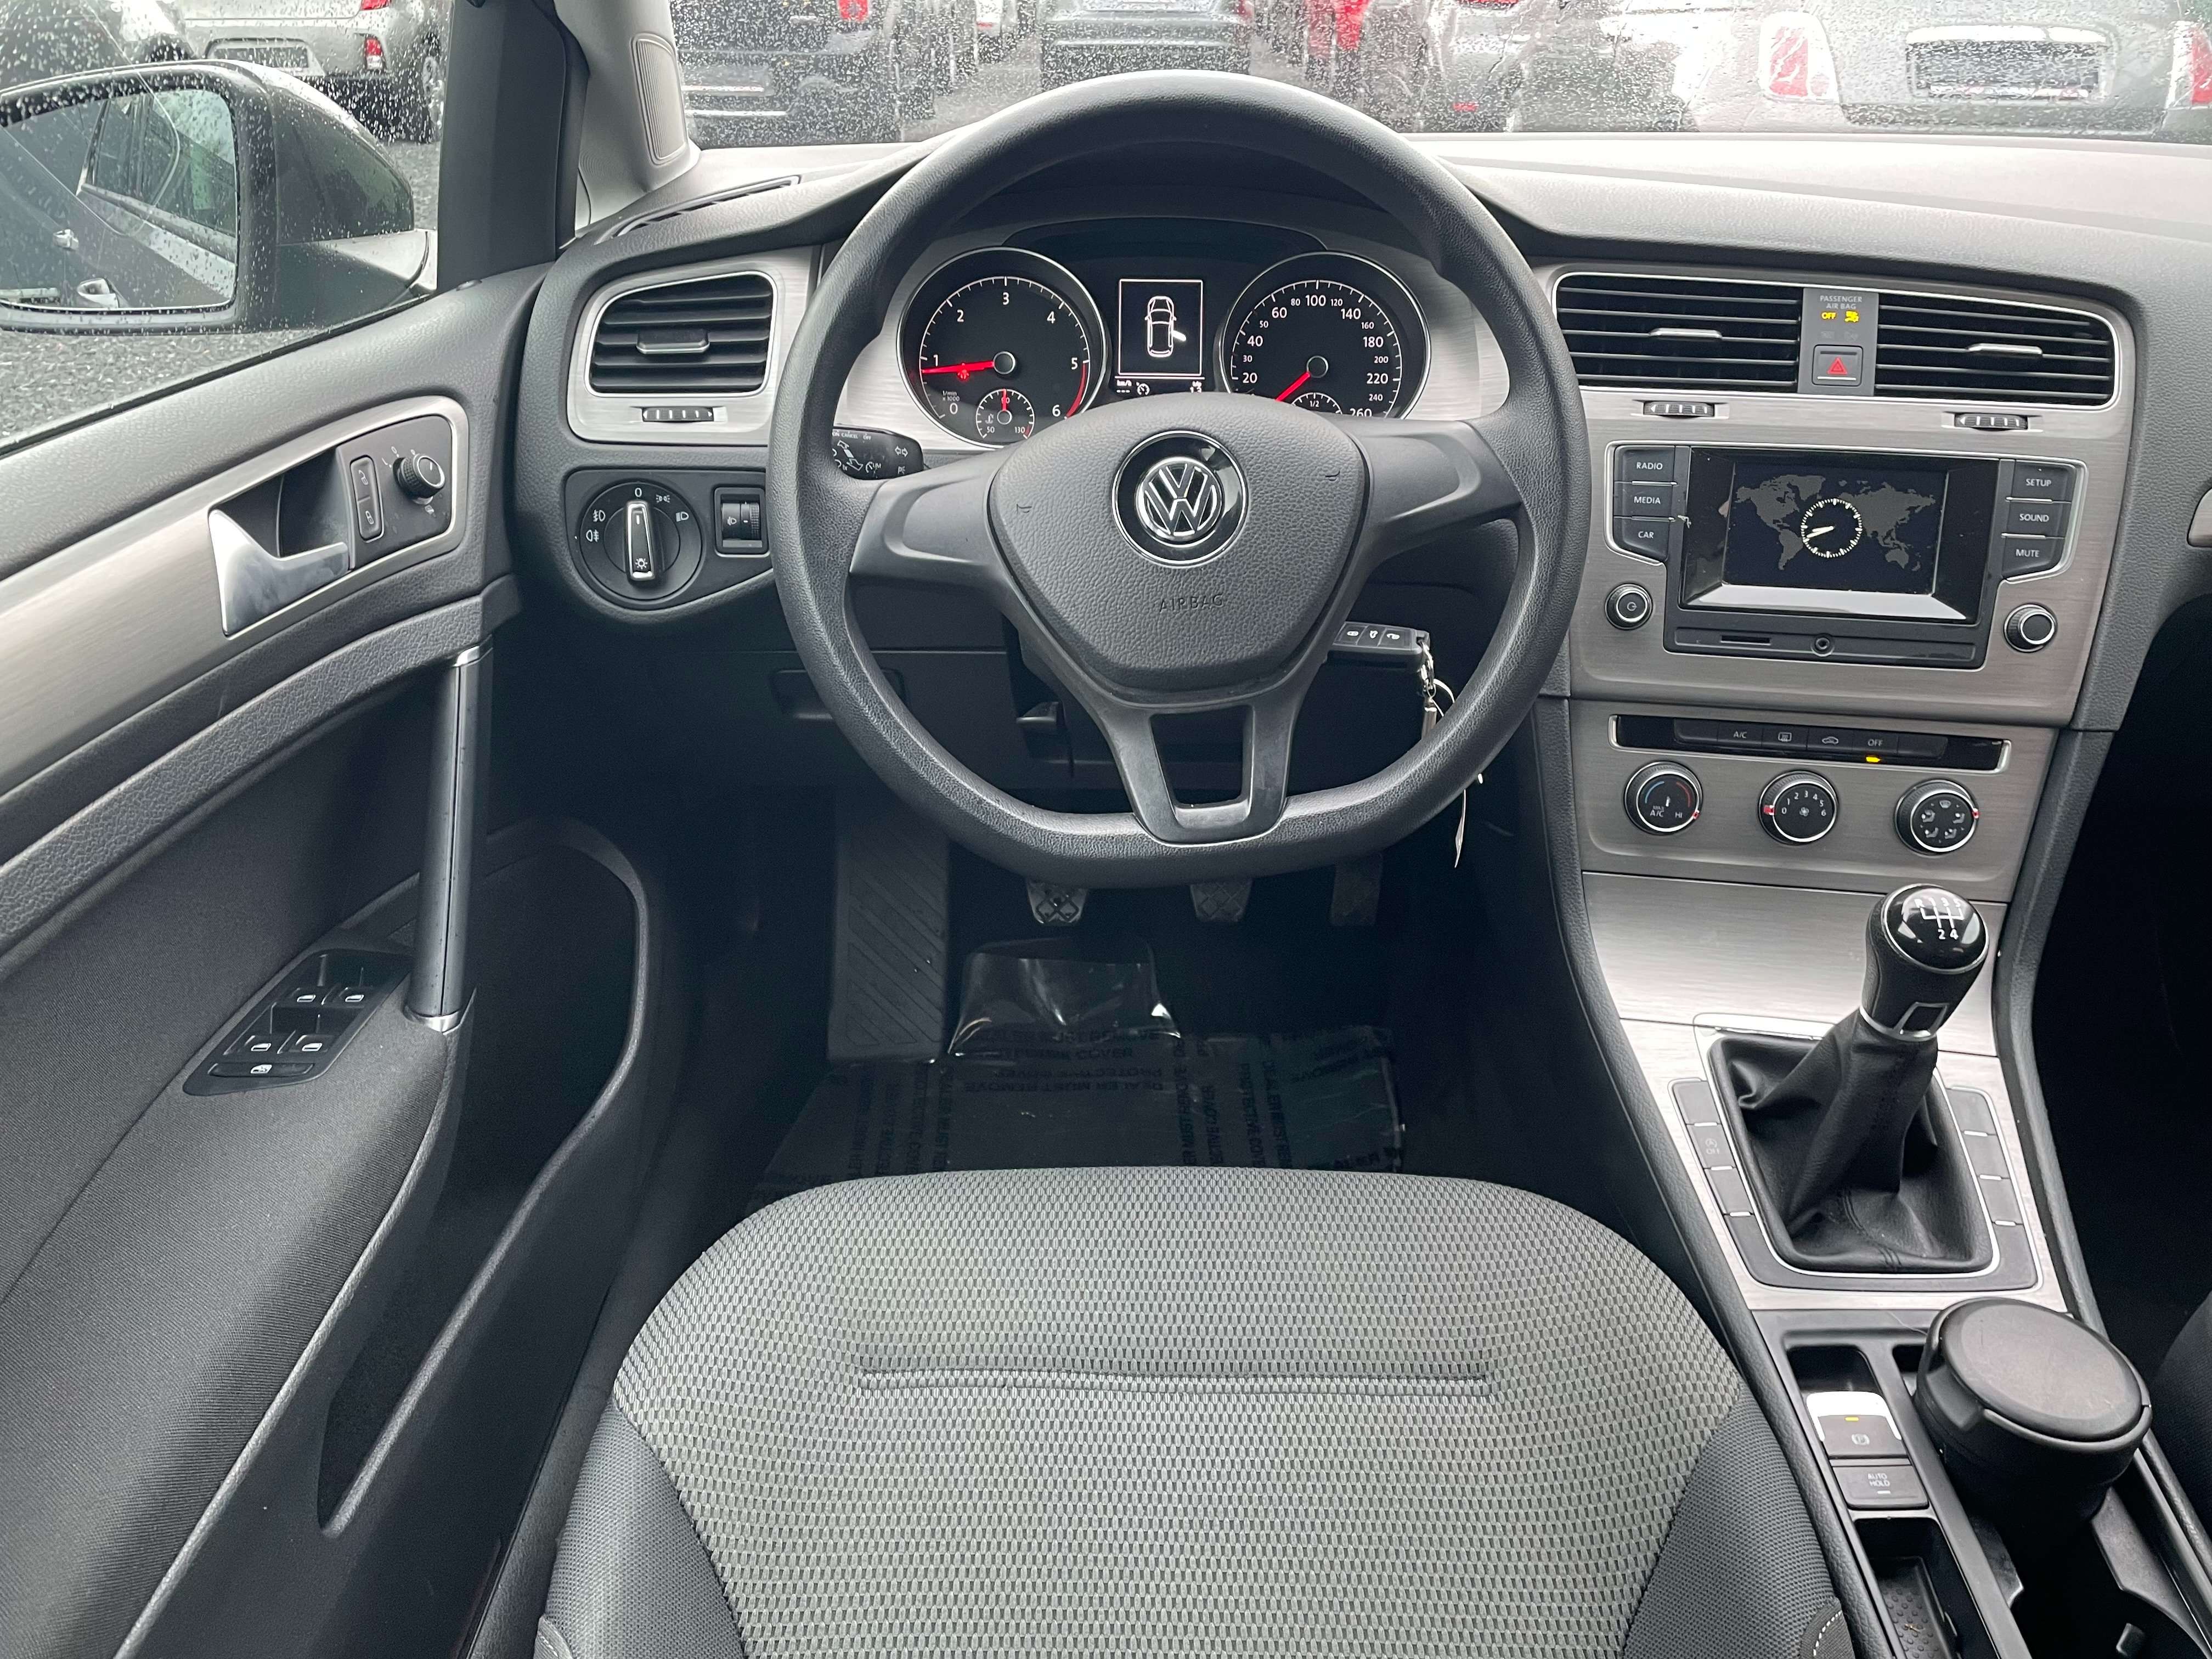 Ninove auto - Volkswagen Golf